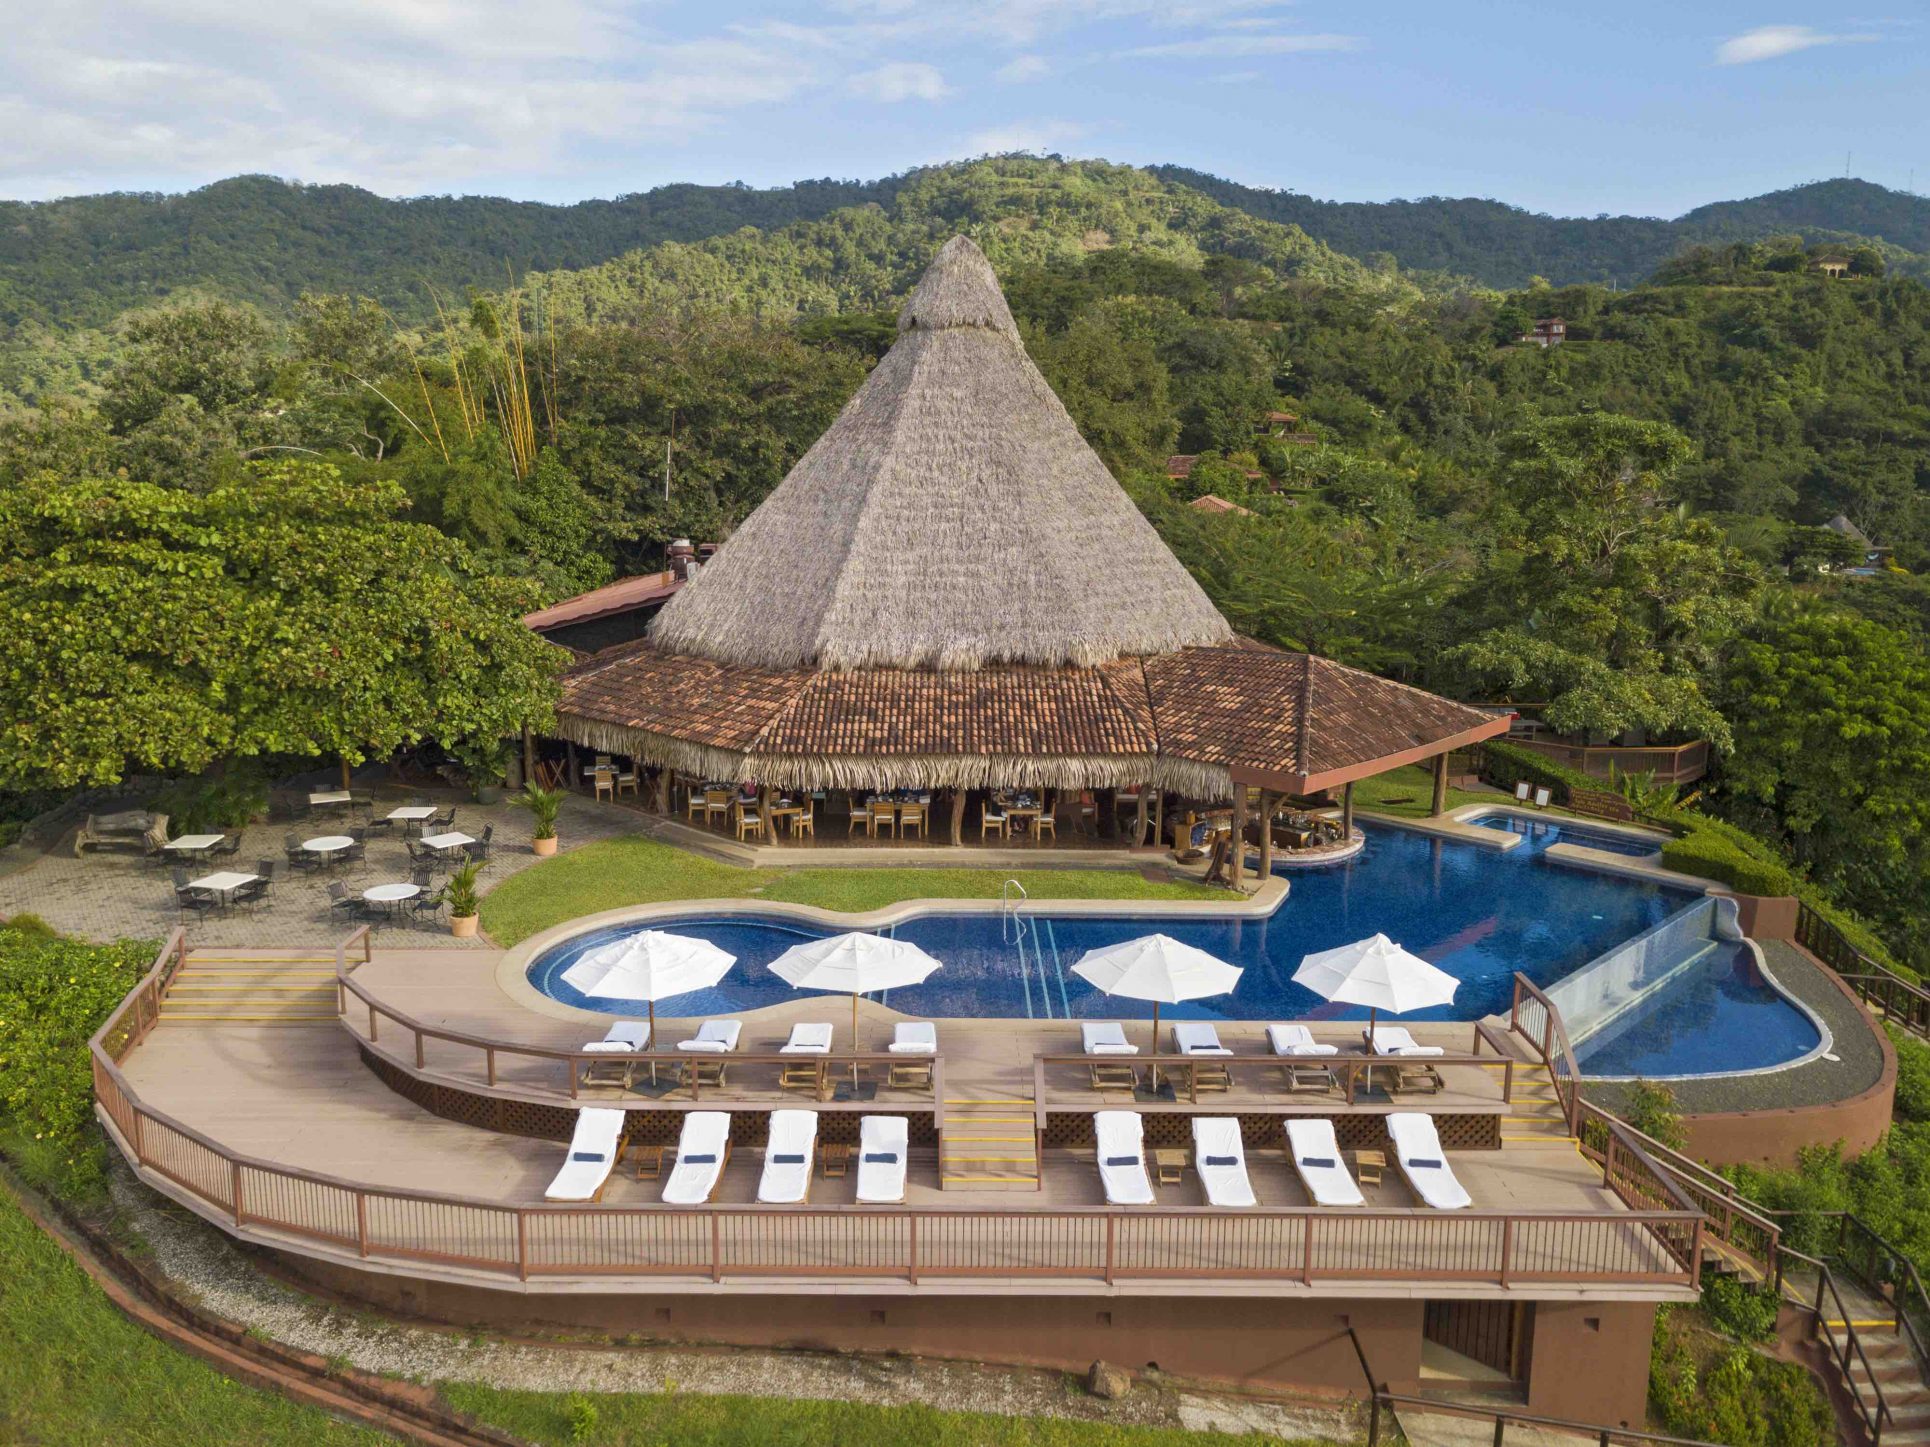 Con tarifa especial para ticos, hotel Punta Islita anuncia reapertura